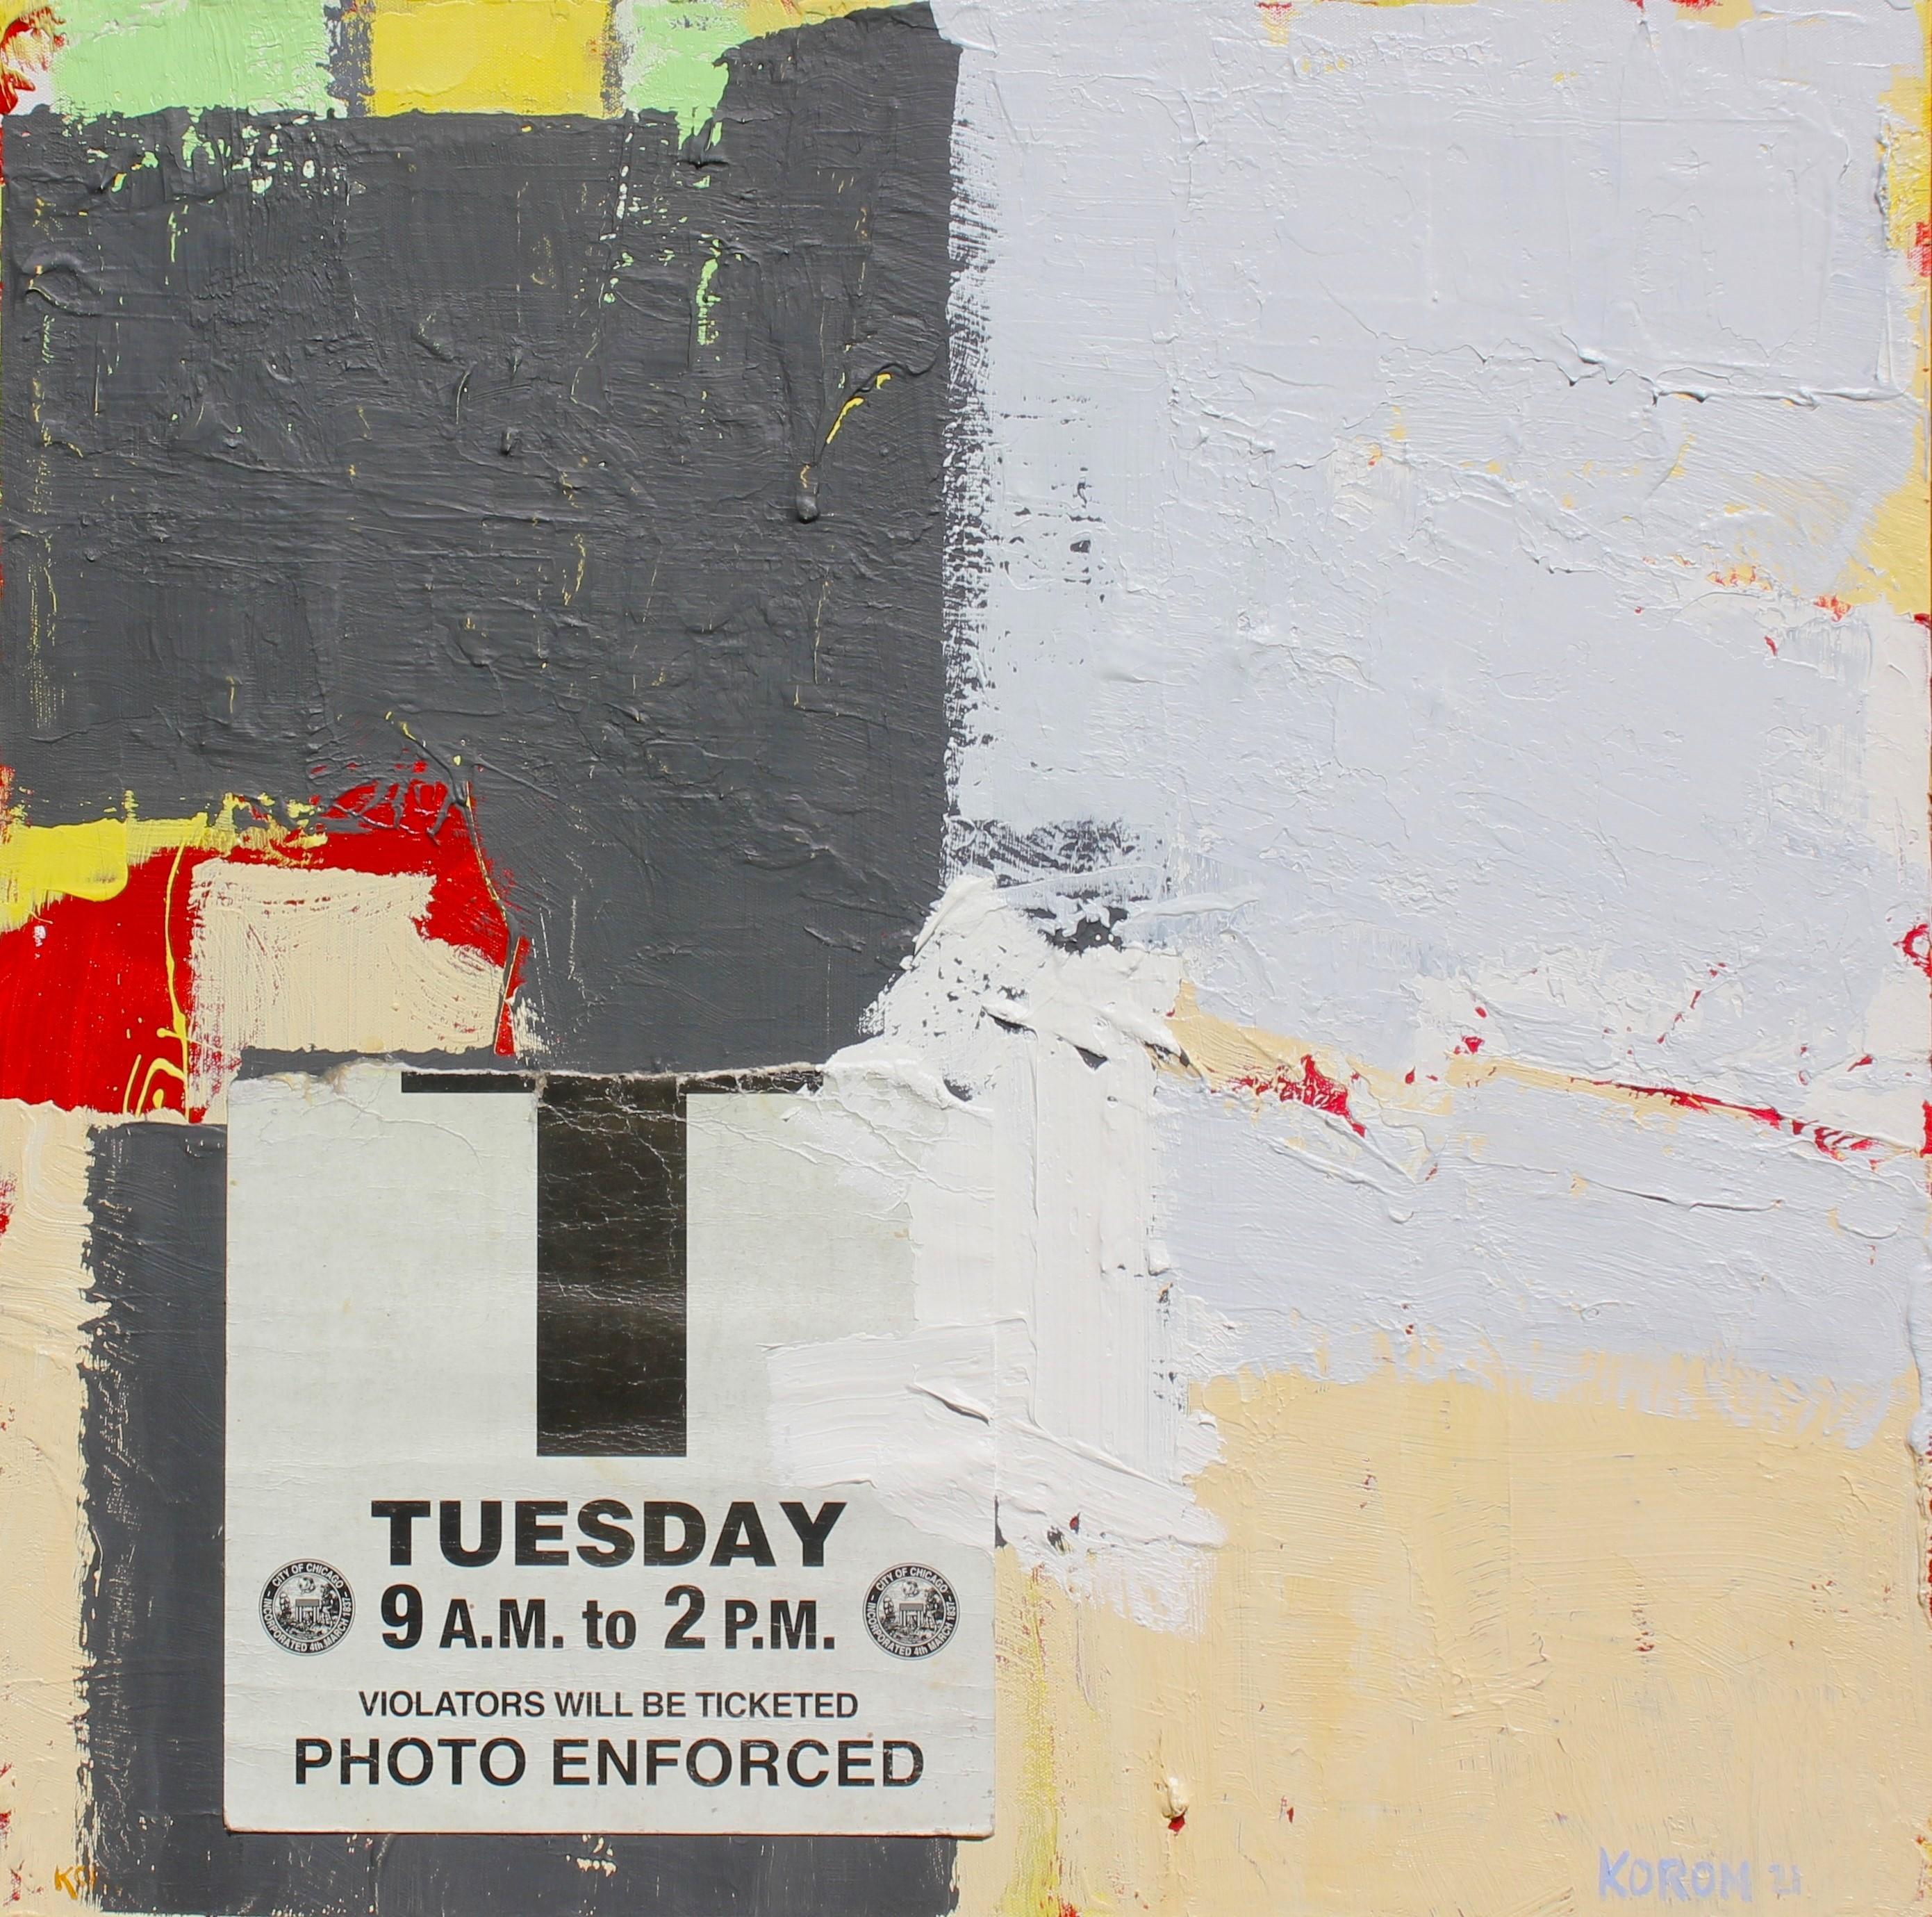 Third Day Warning, Abstract Painting - Mixed Media Art by Joey Korom